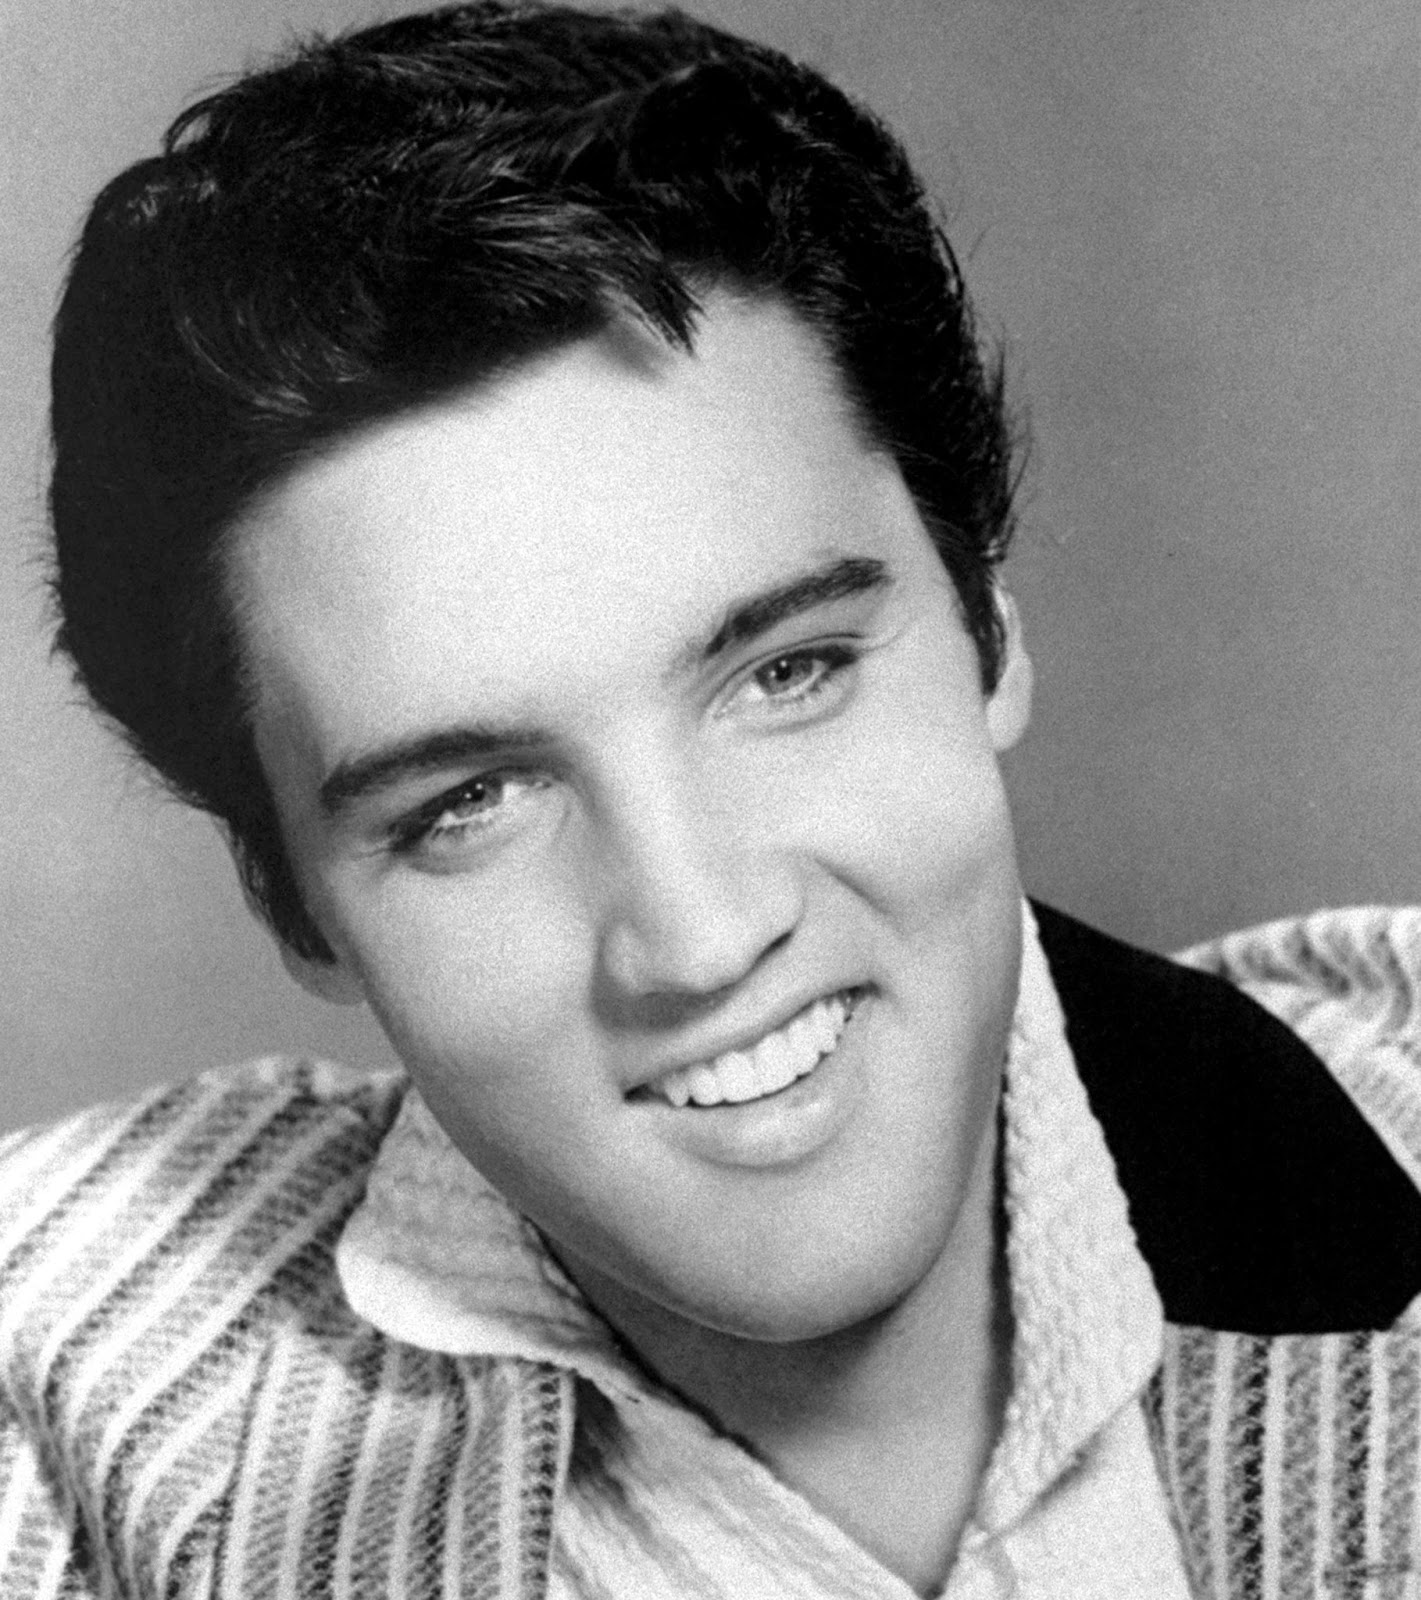 Dwayne The Rock Johnson Hairstyle Elvis Presley